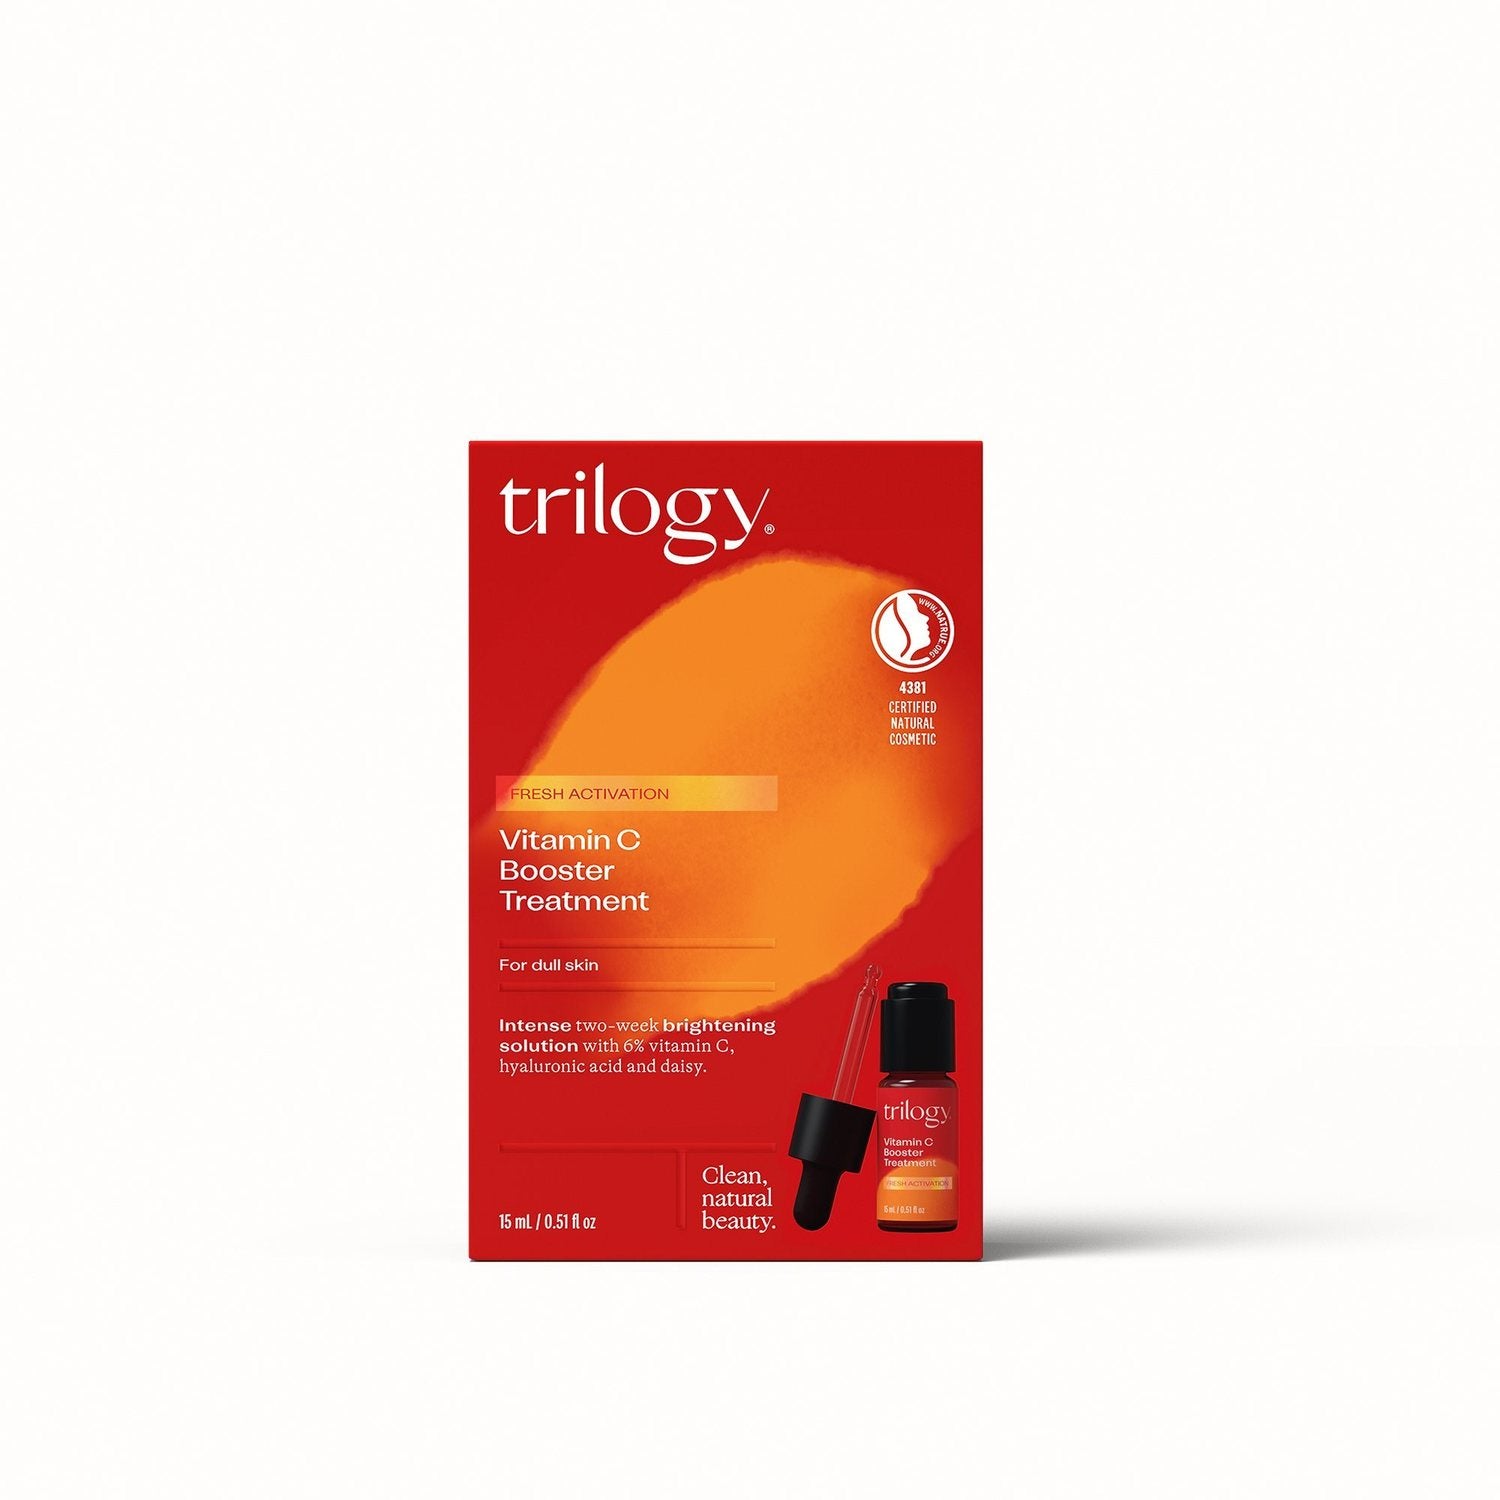 Trilogy Vitamin C Booster Treatment 15ml.